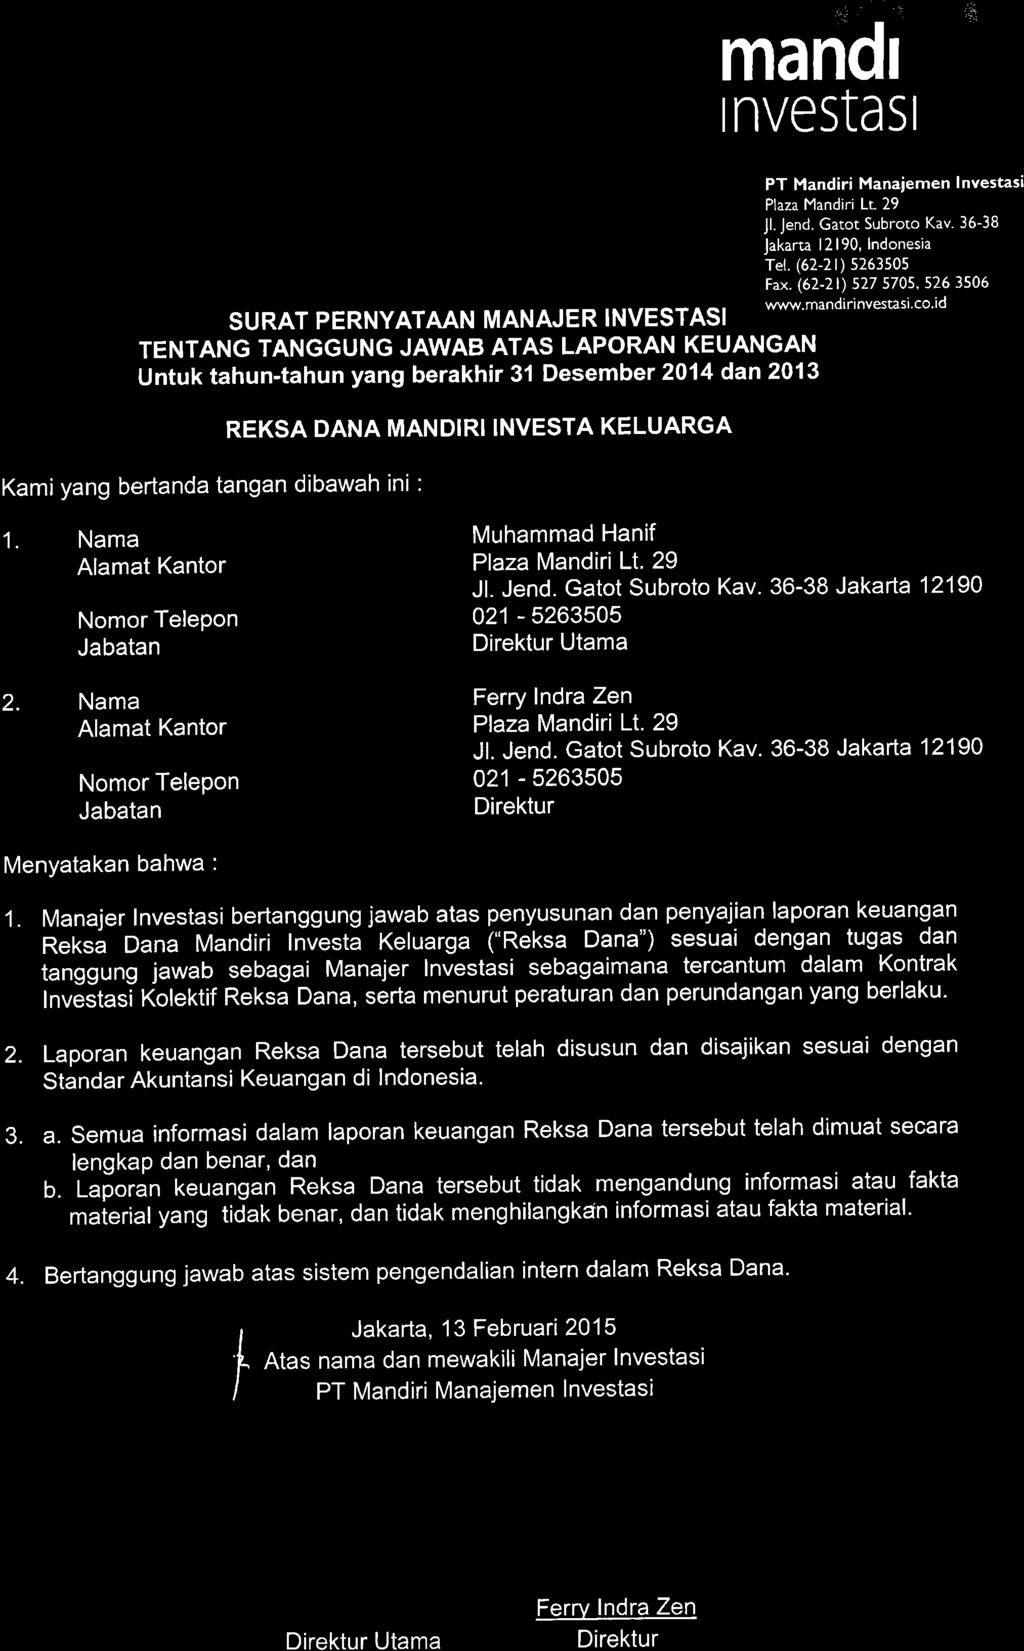 I manol tnvestasl PT Mandiri Manaiemen Investasi Plaza Mandiri Lr 29 Jl. Jend. Gatot Subroto Kav. 36-38 r,lit liii8,il',il"''' Fax.